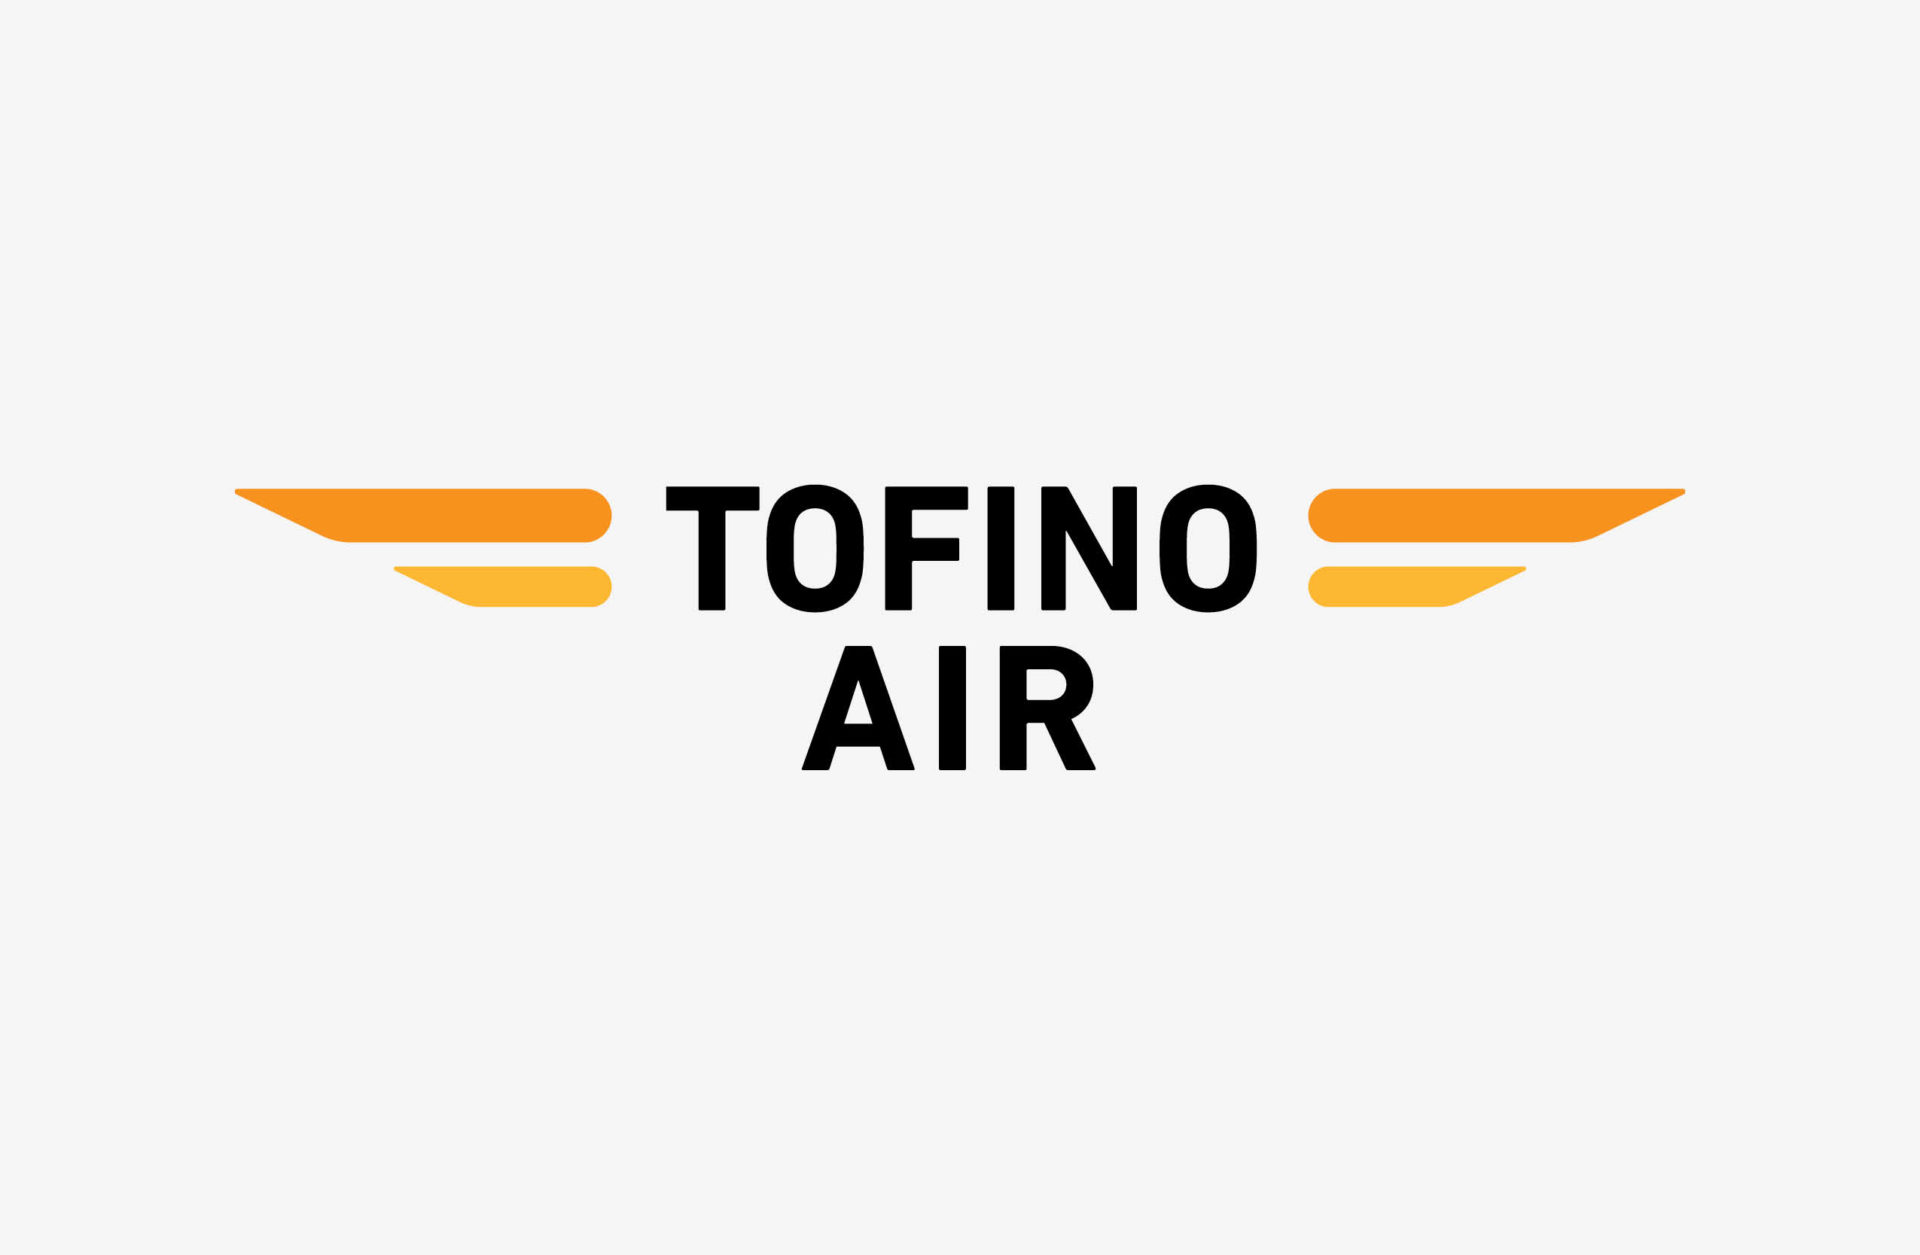 Tofino Air Logo